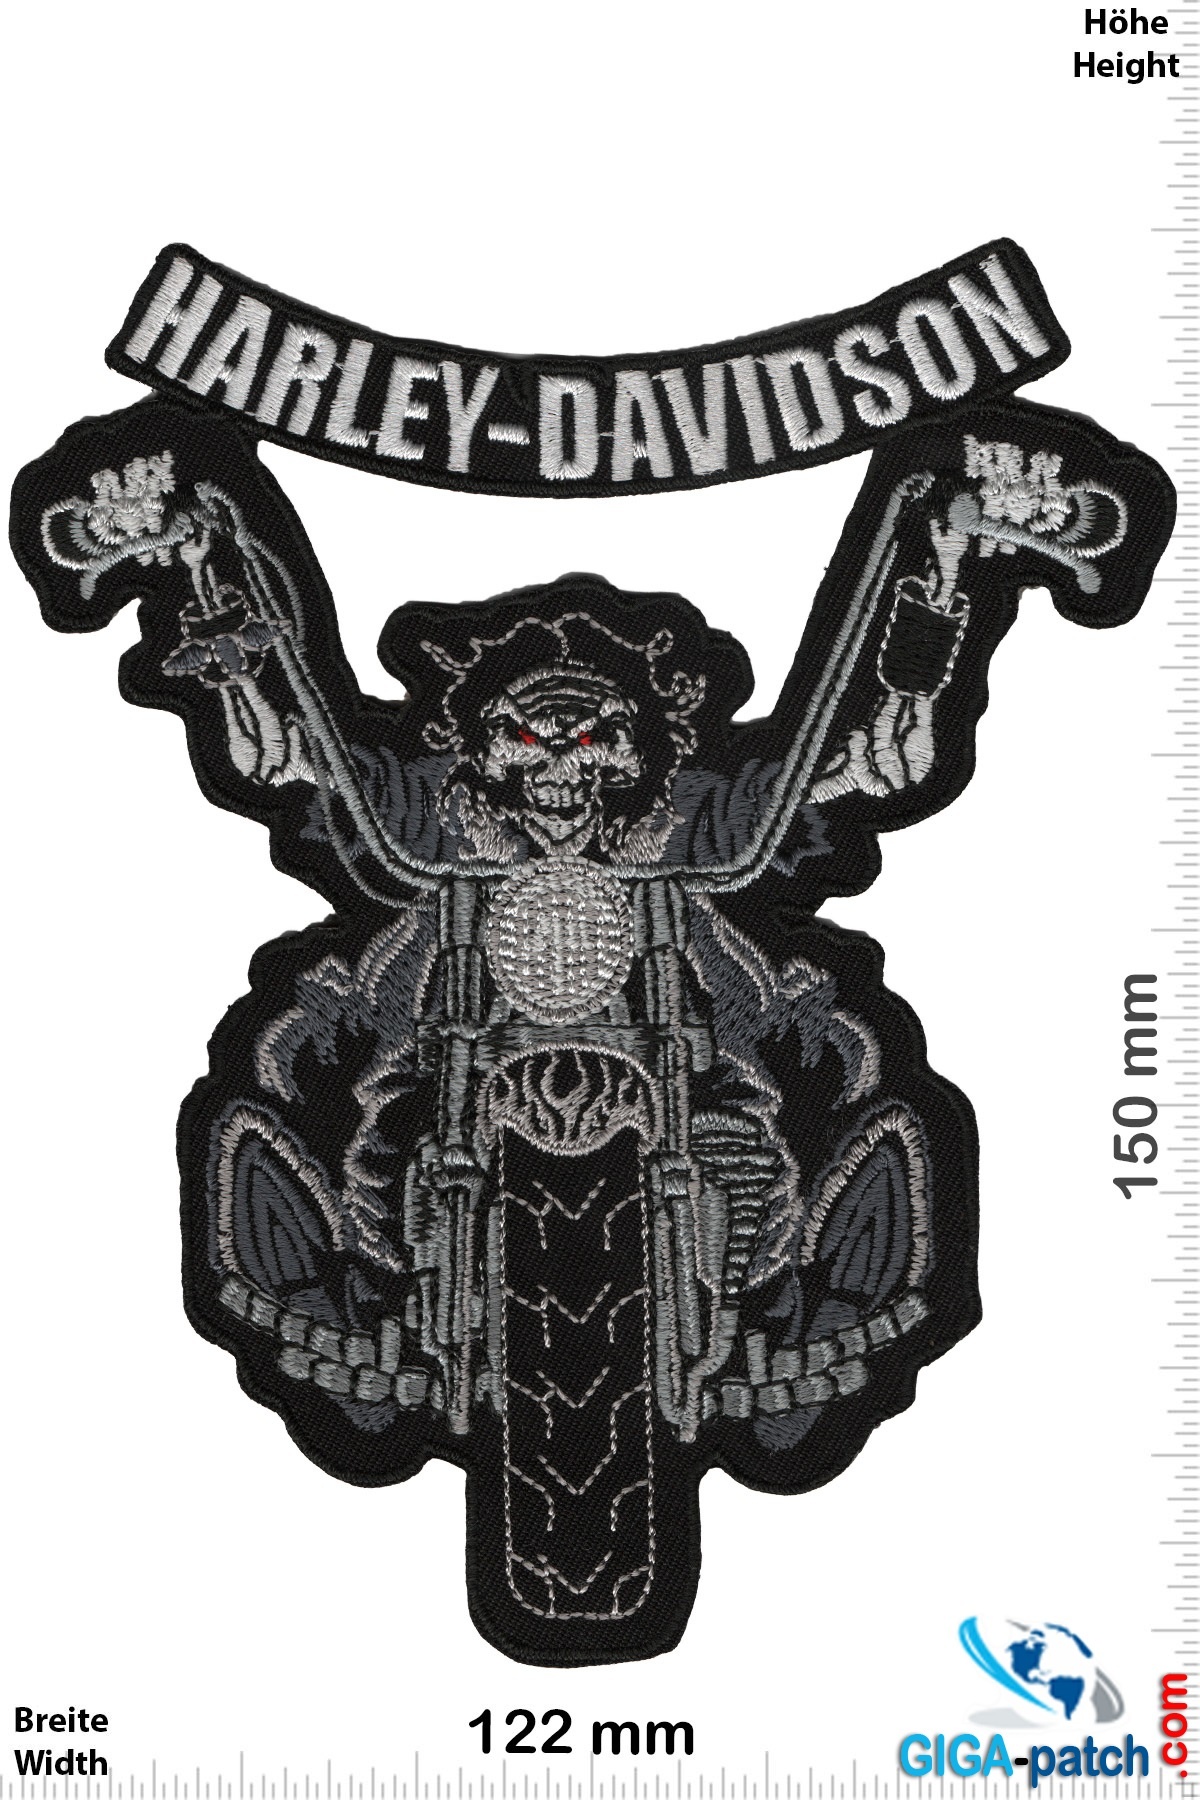 Harley Davidson Harley Davidson - Ghostrider